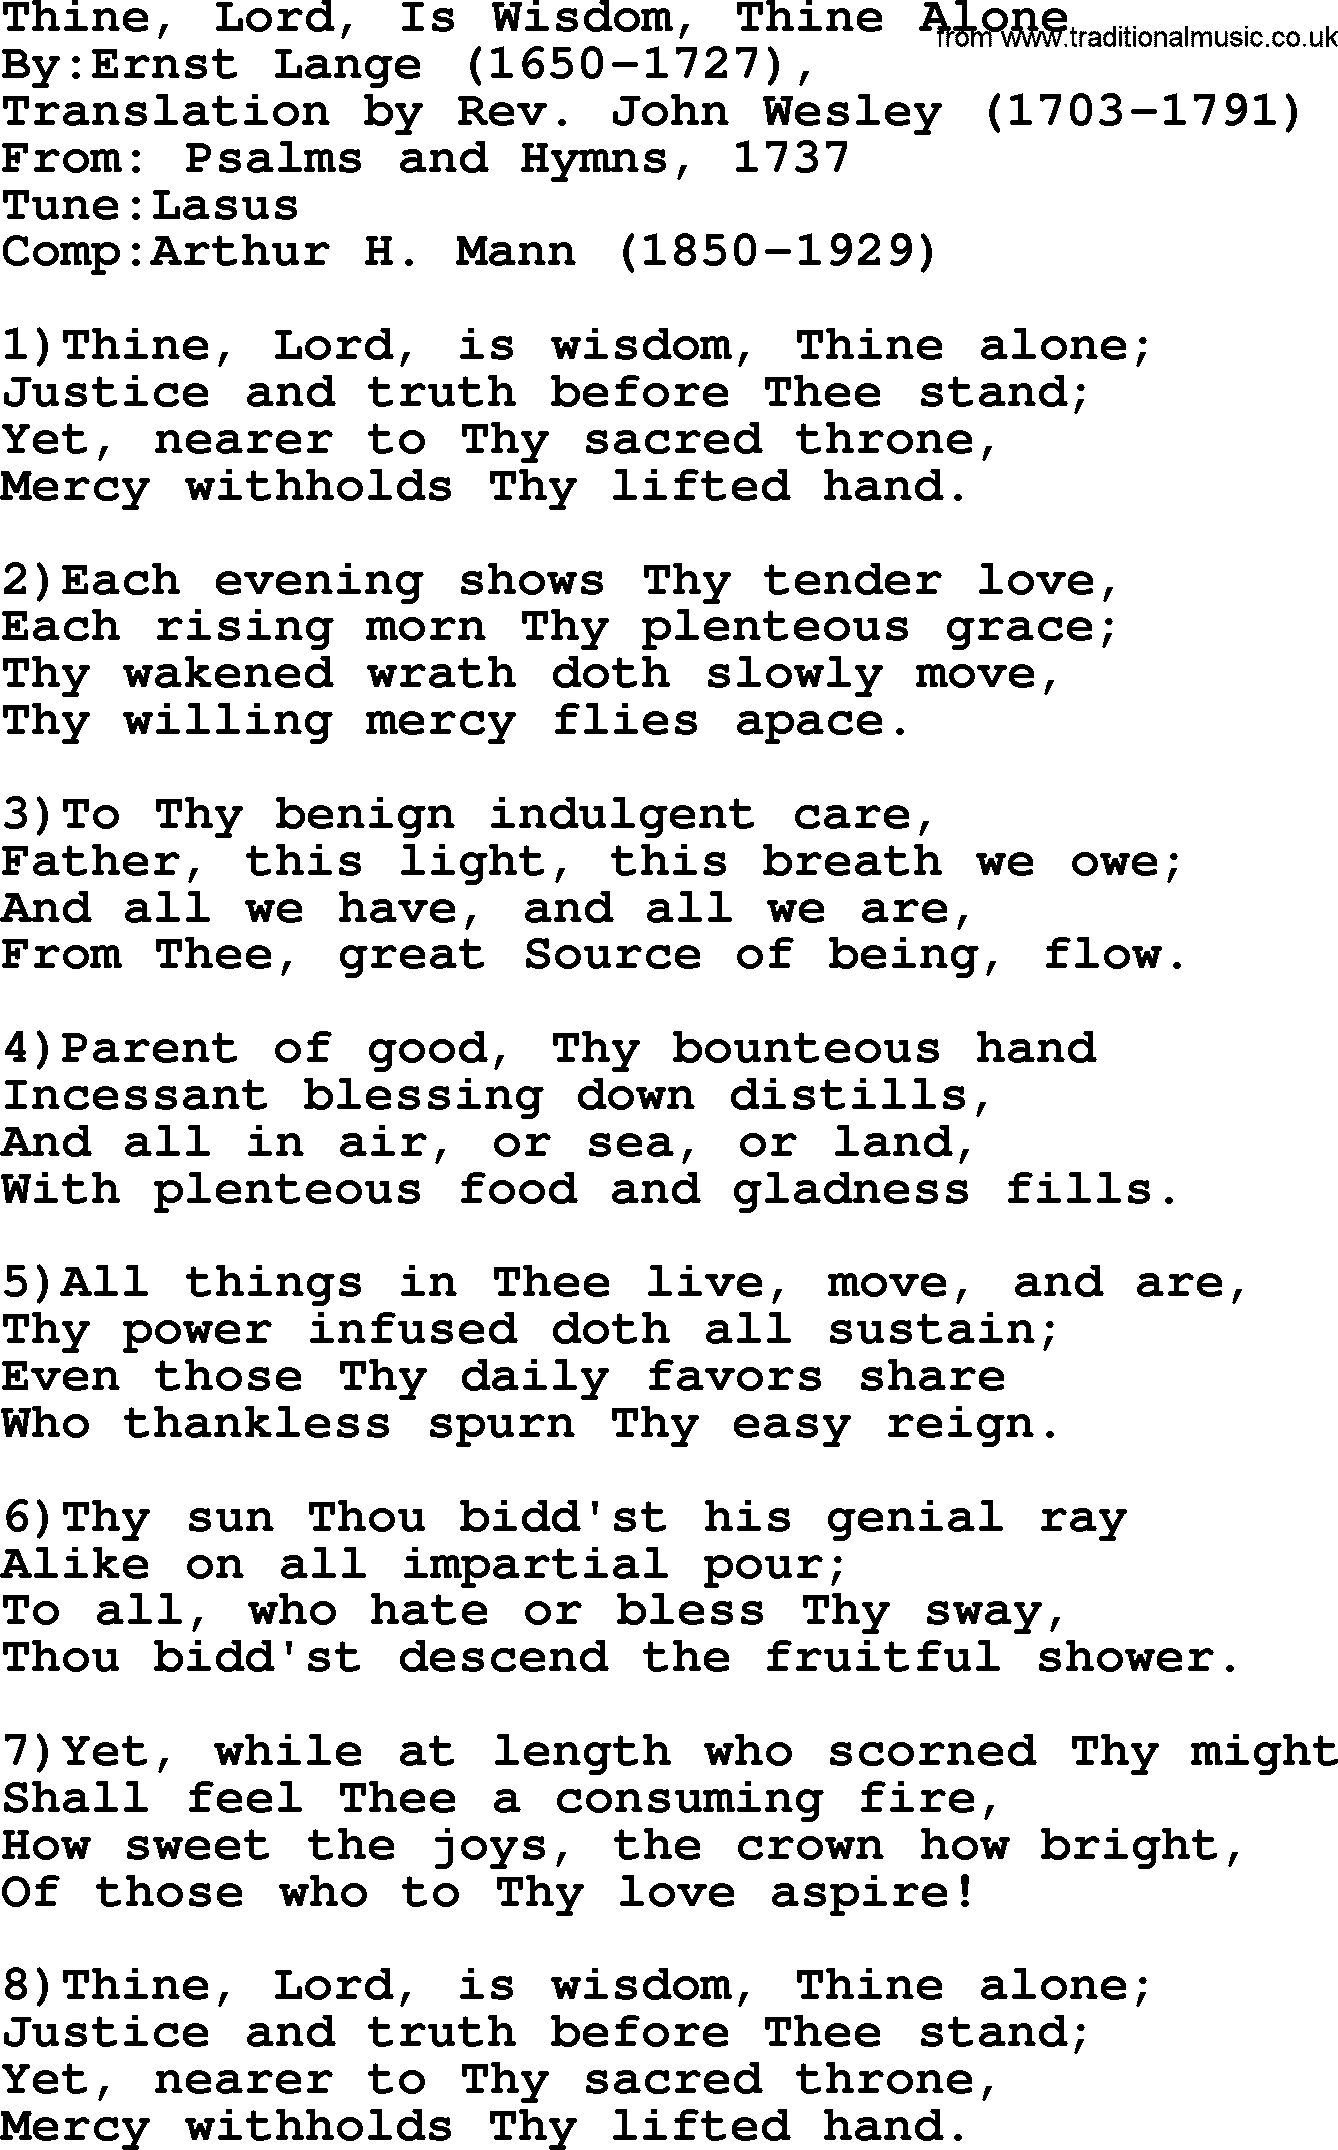 Methodist Hymn: Thine, Lord, Is Wisdom, Thine Alone, lyrics